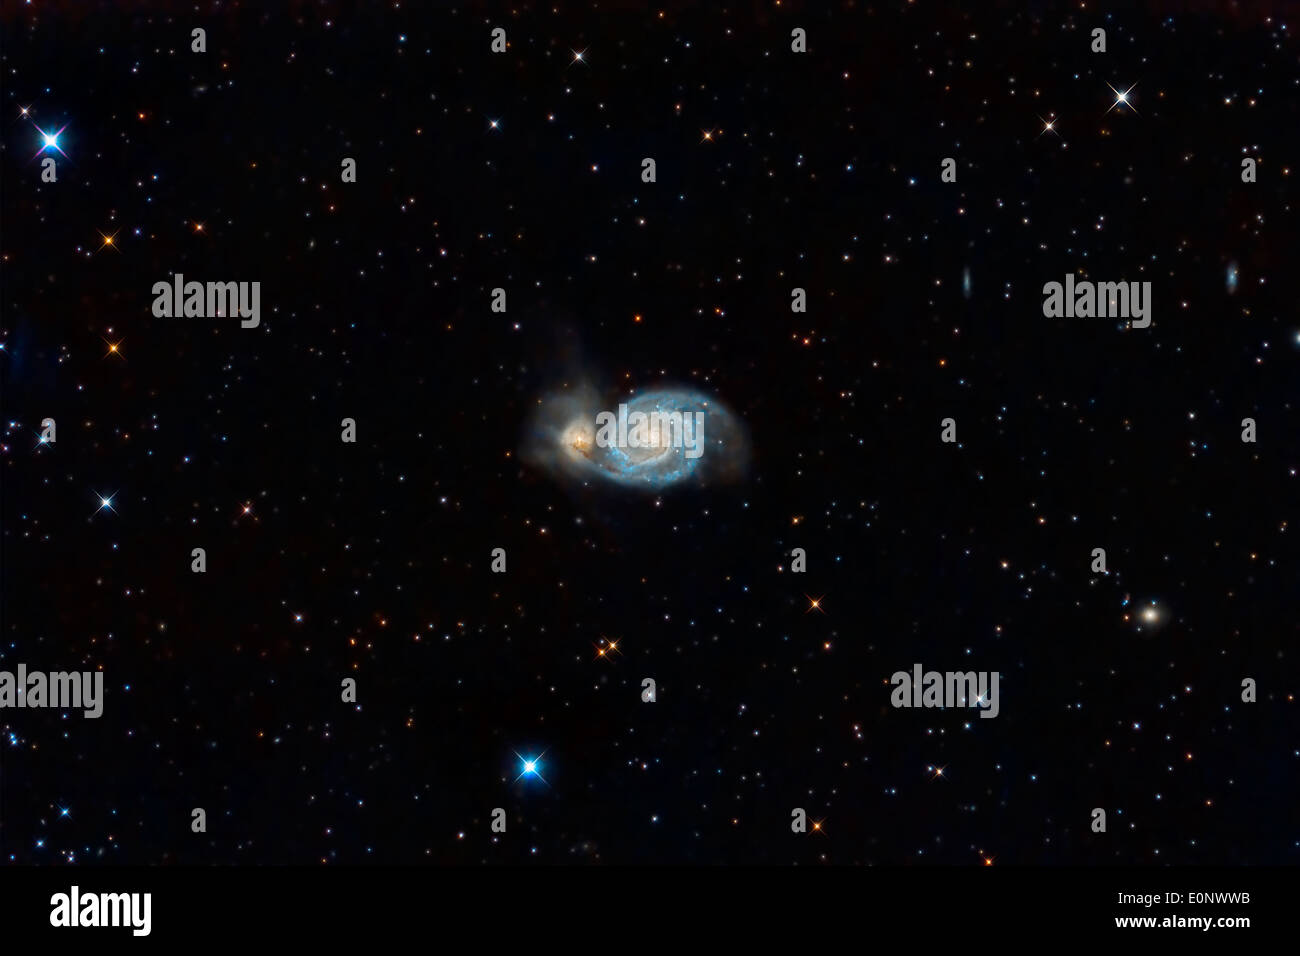 Amateur telescope -Fotos und -Bildmaterial in hoher Auflösung – Alamy